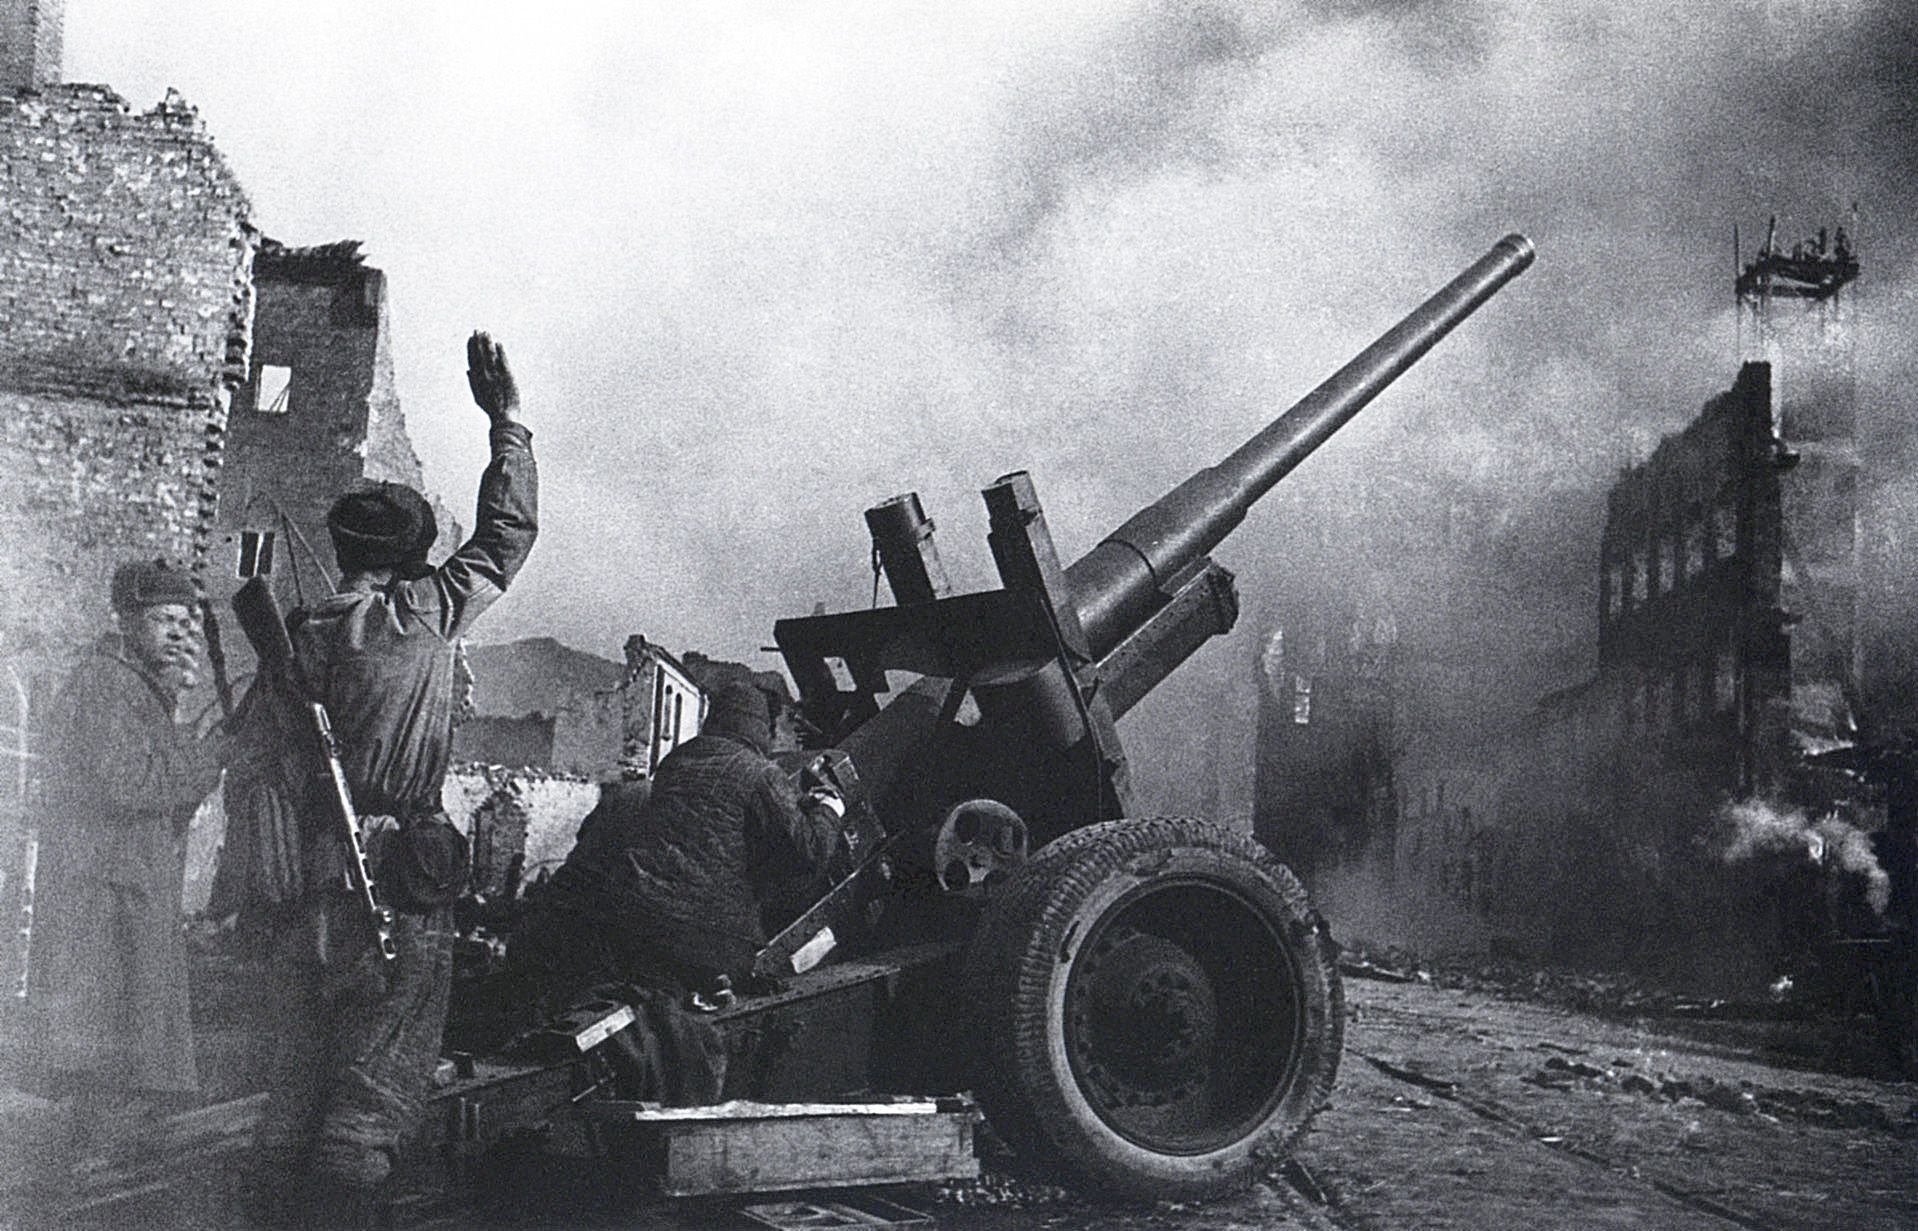 Картинки про велико отечественную войну. А19 пушка 1941.